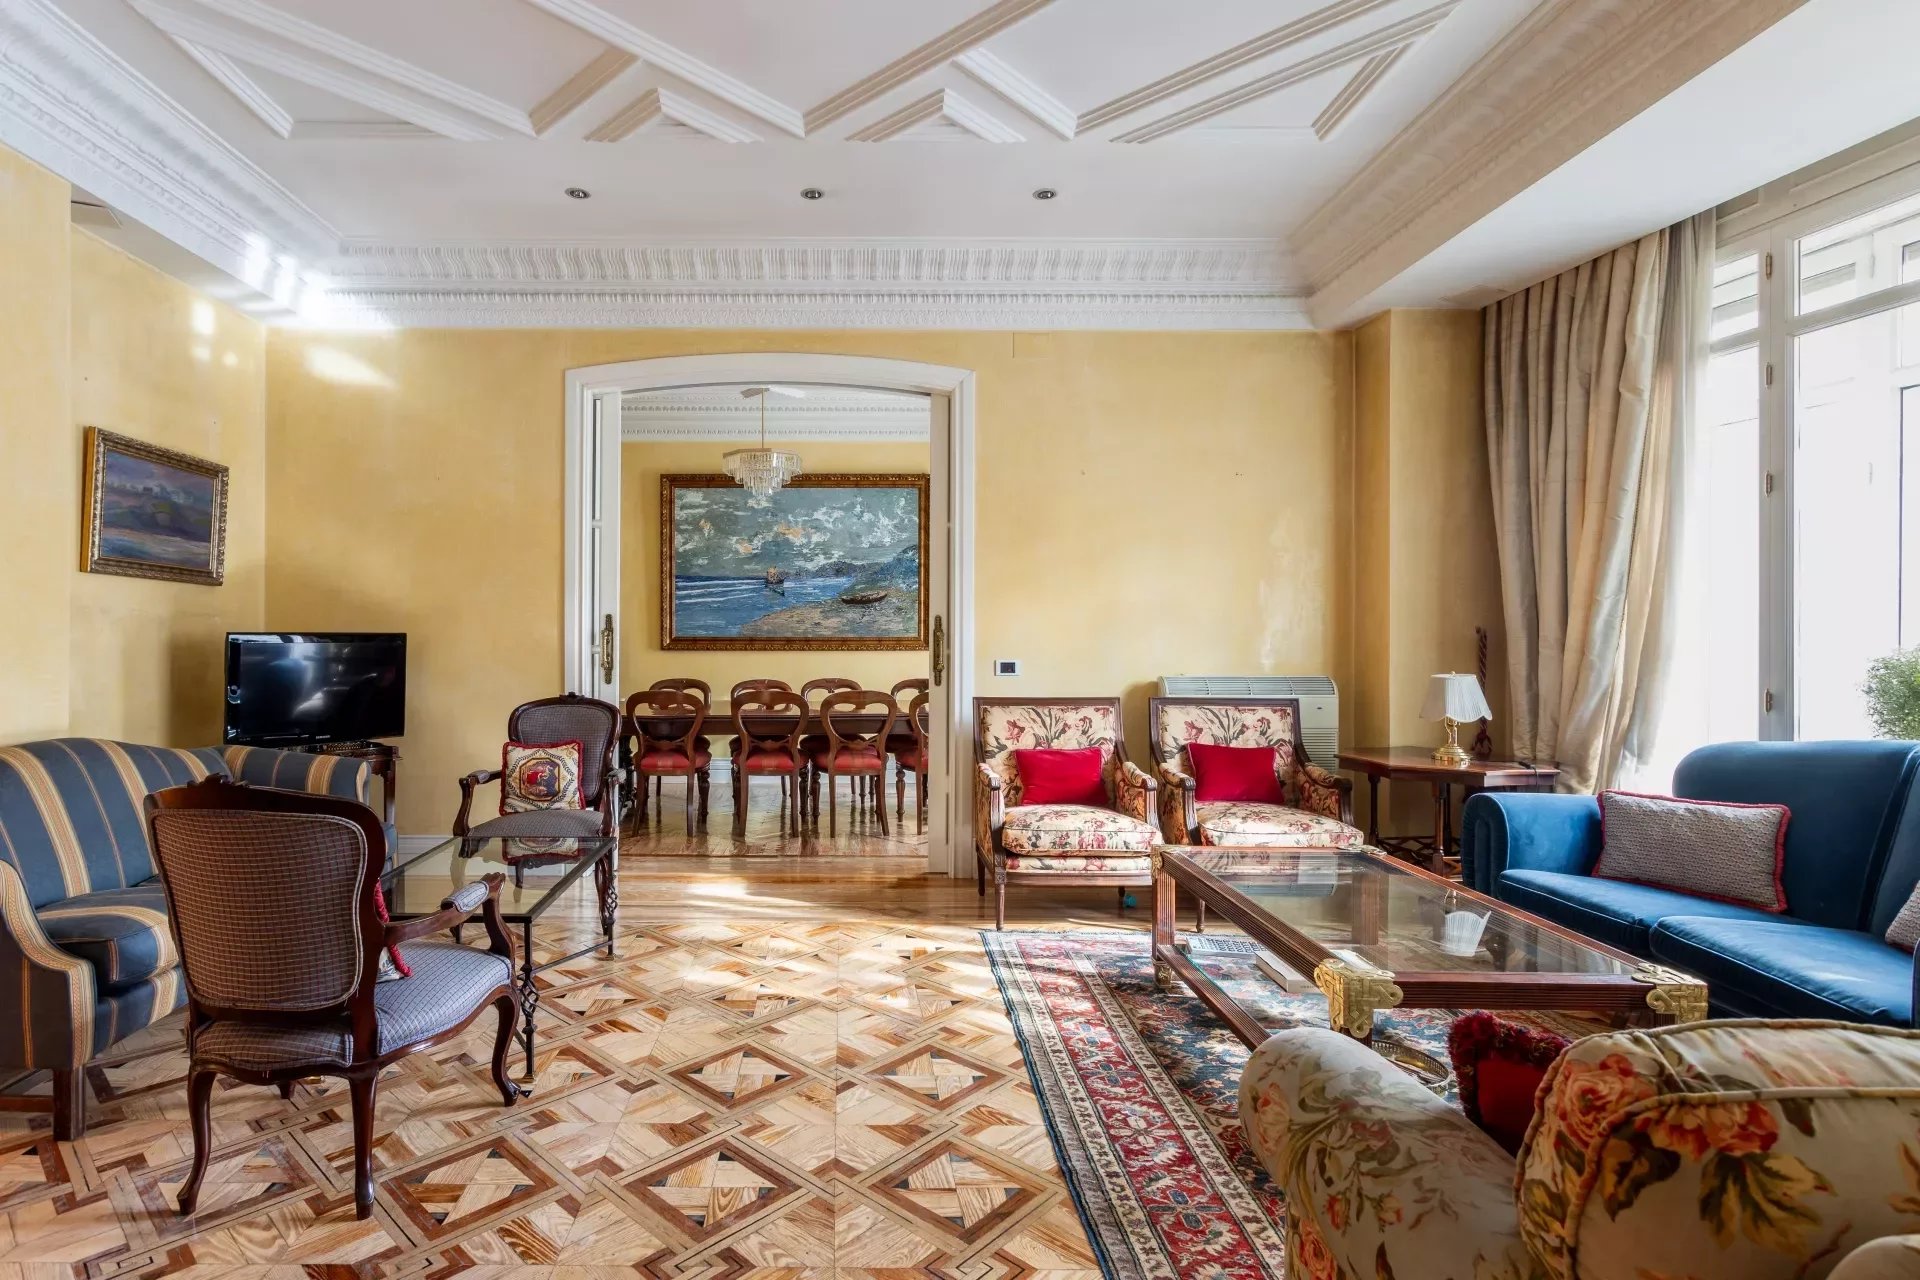 Exclusive apartment in the prestigious area of Almagro, Madrid - picture 2 title=